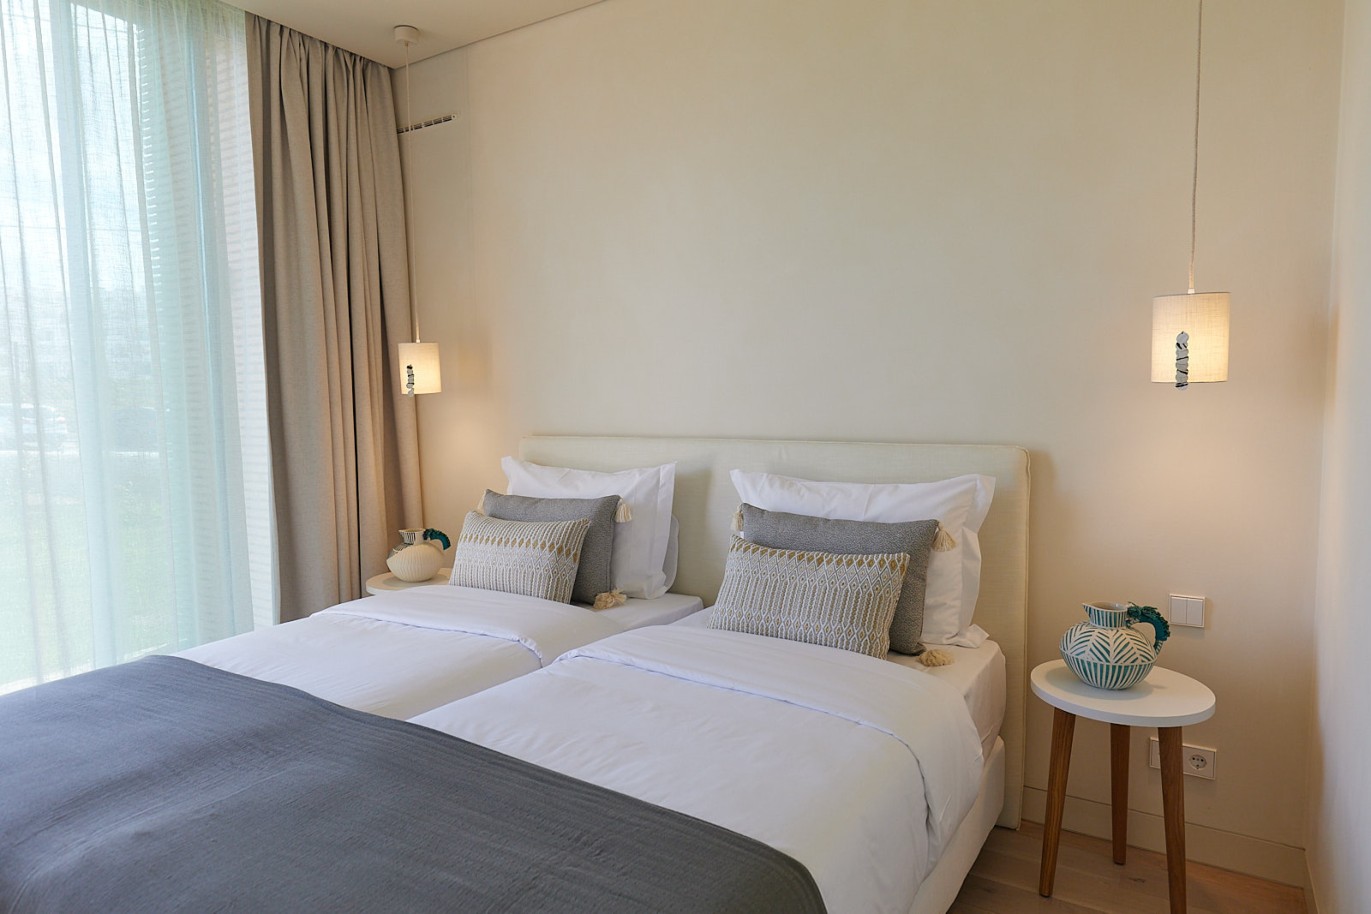 2 bedroom apartment in resort, for sale in Porches, Algarve_228950